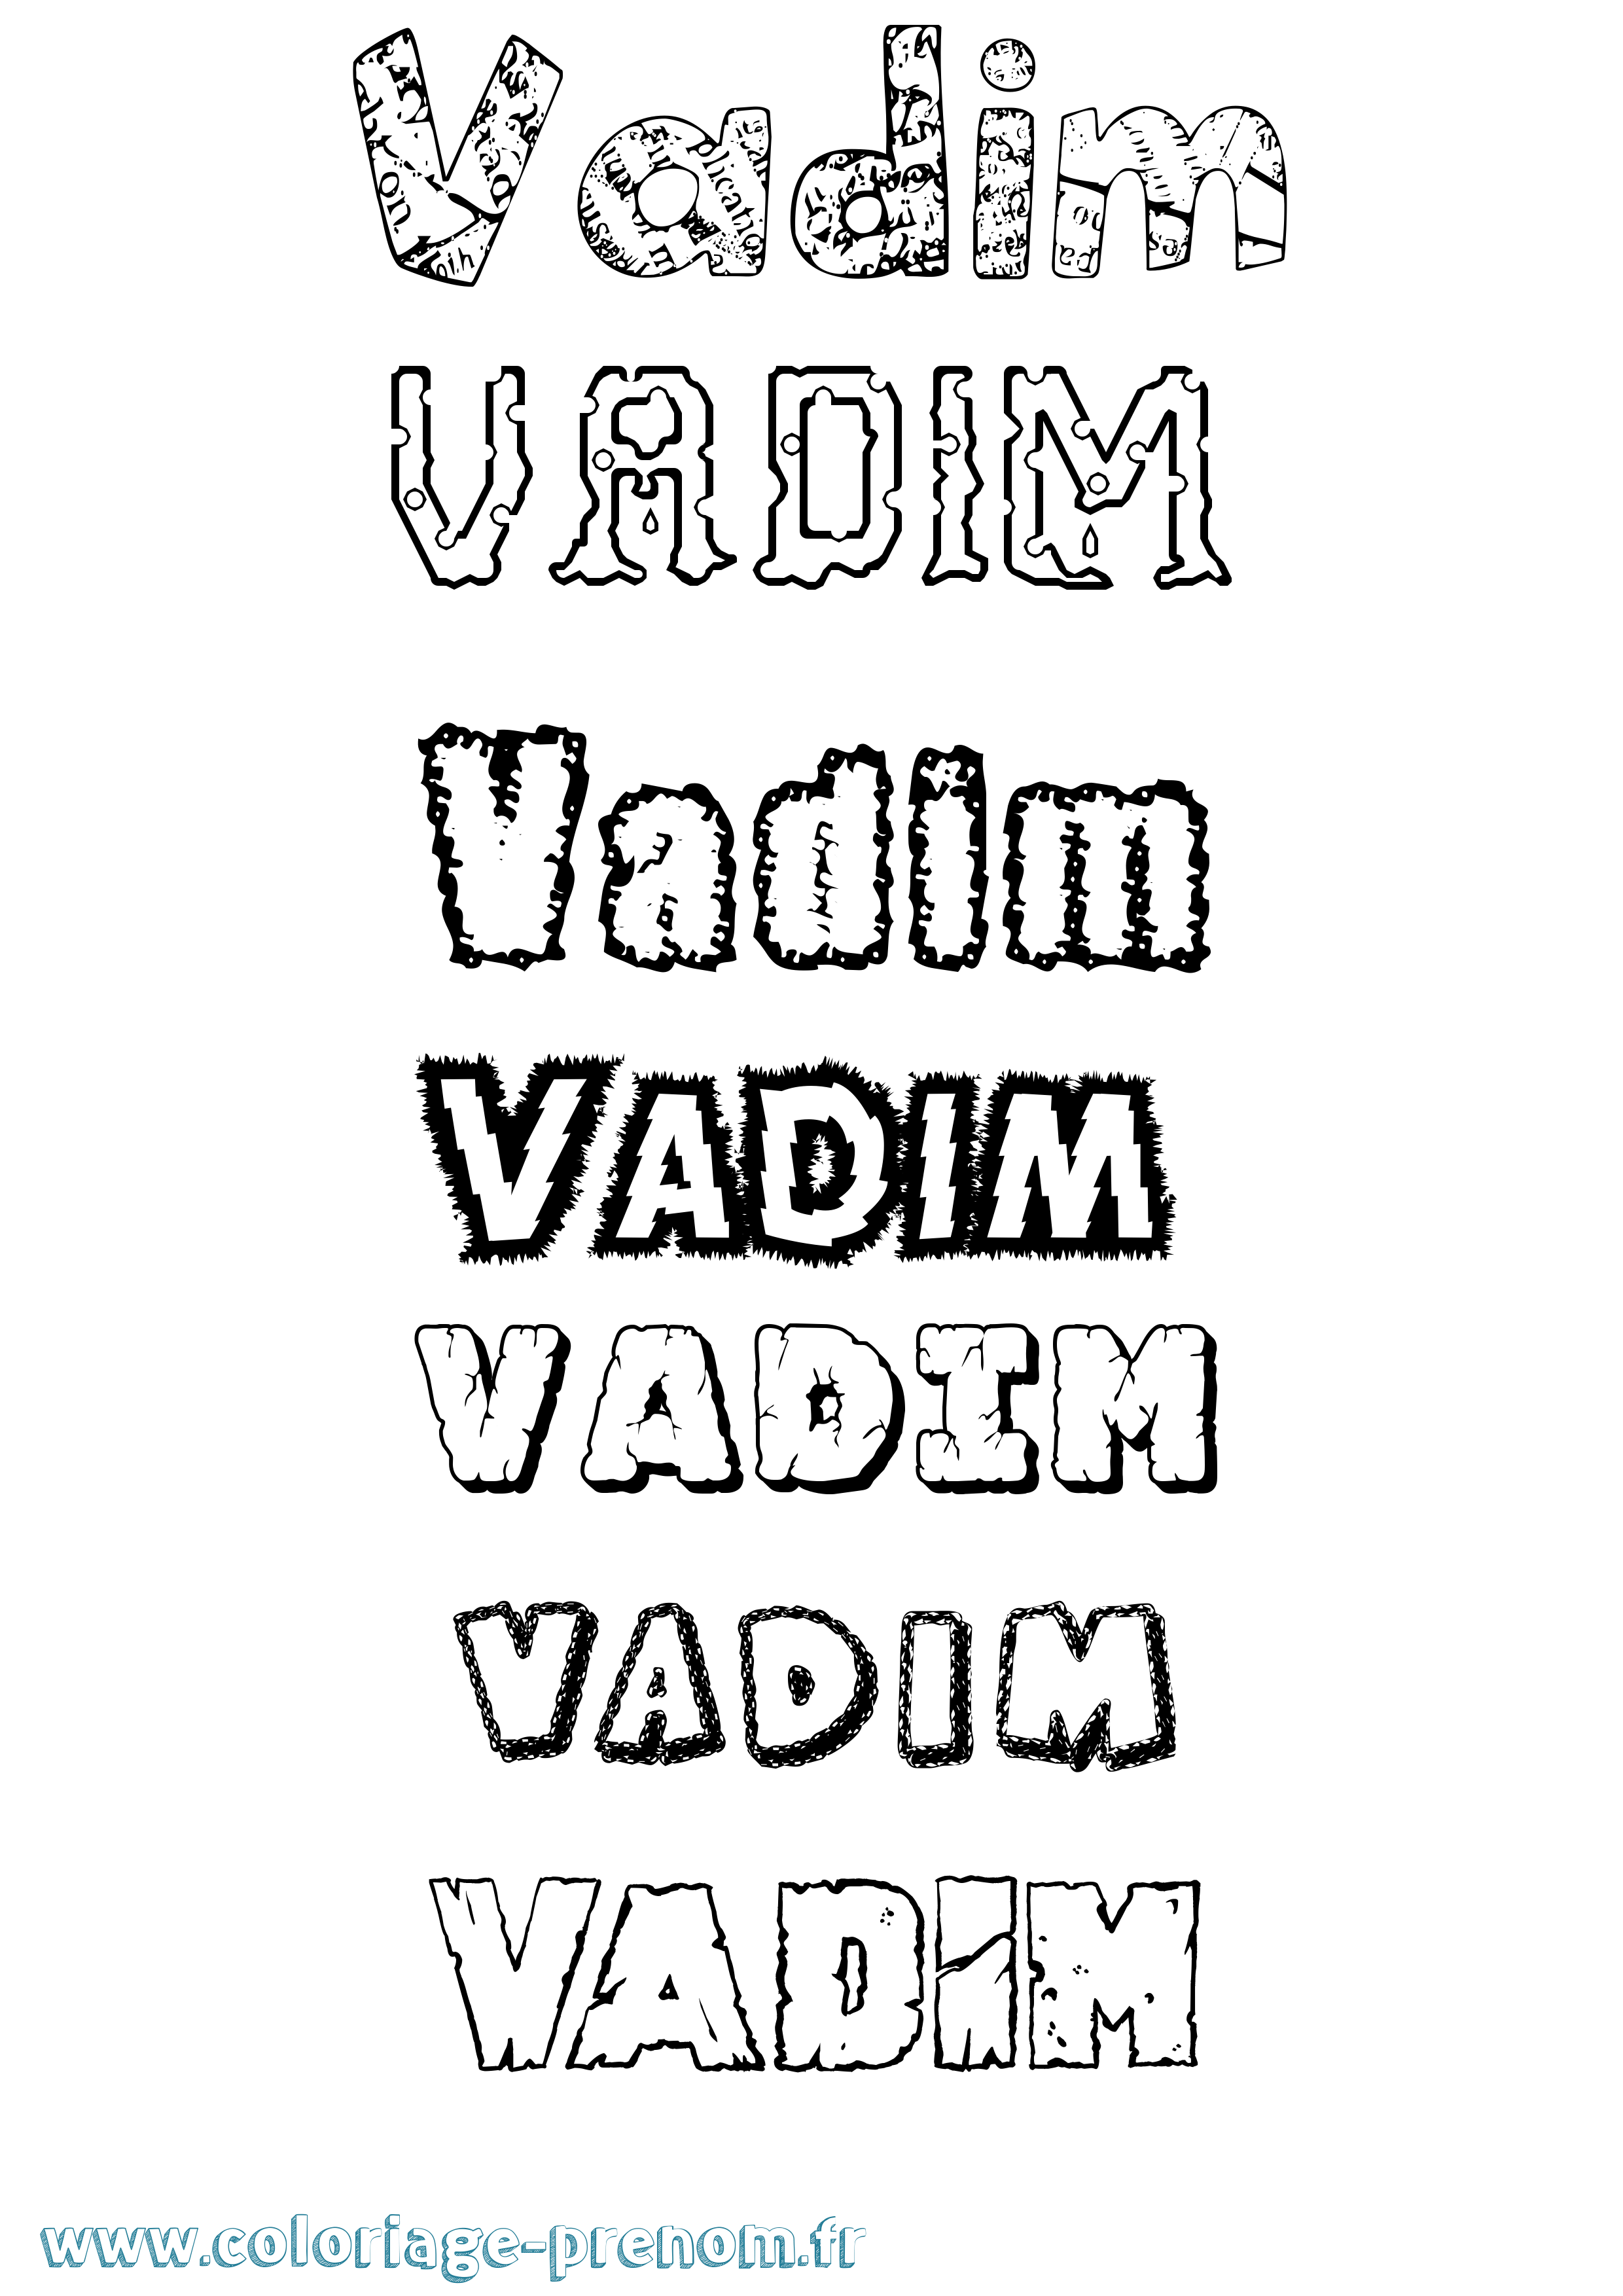 Coloriage prénom Vadim